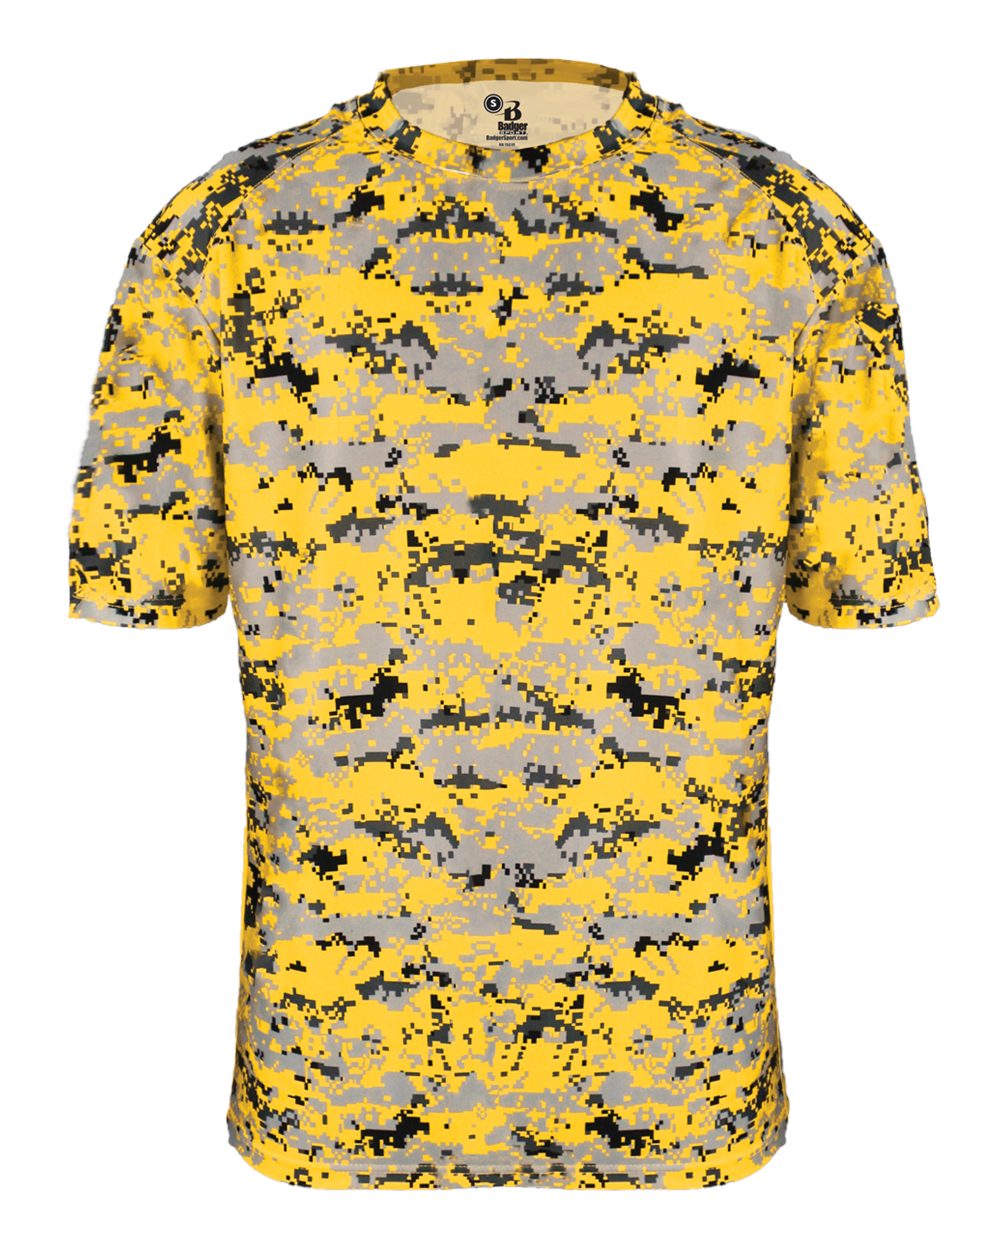 yellow camo baseball jersey